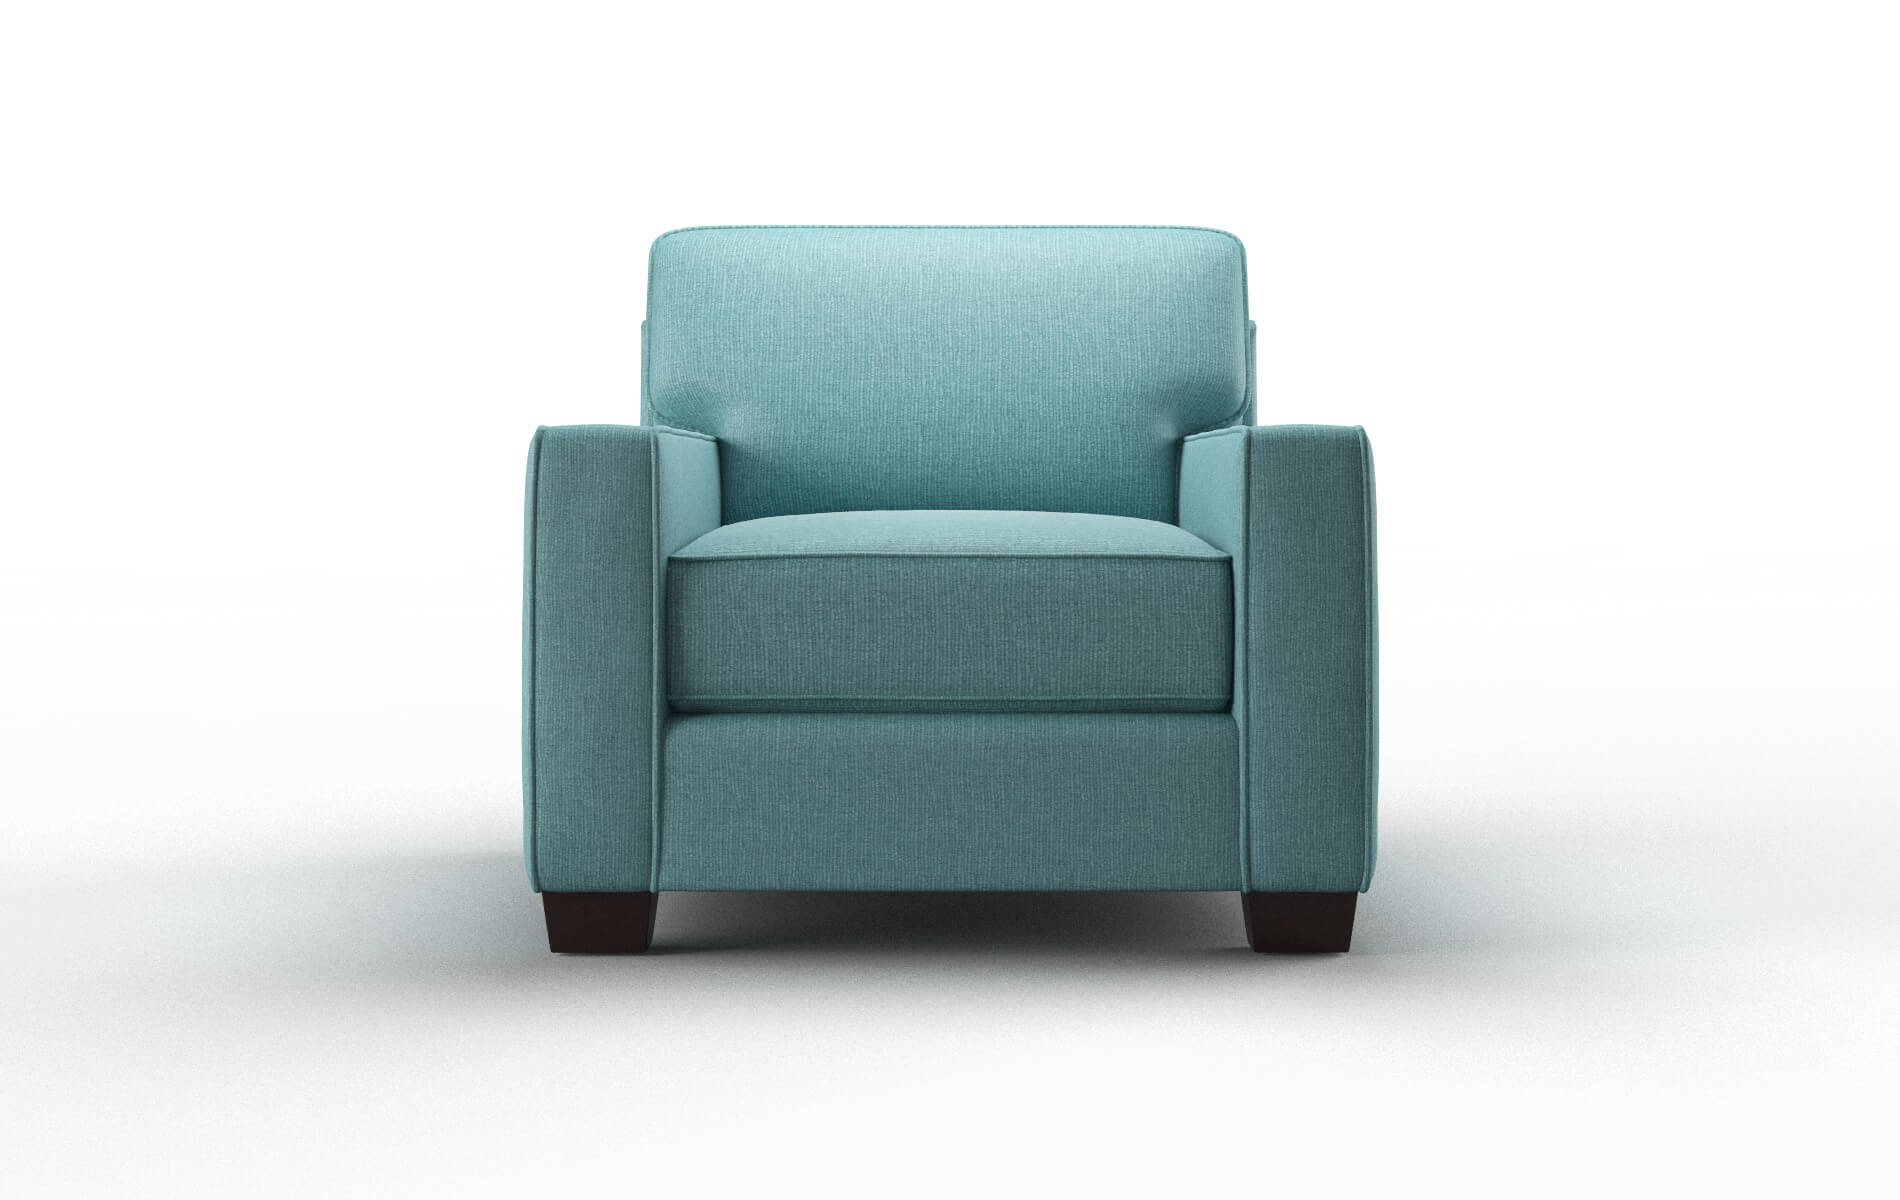 Chicago Parker Turquoise Chair espresso legs 1